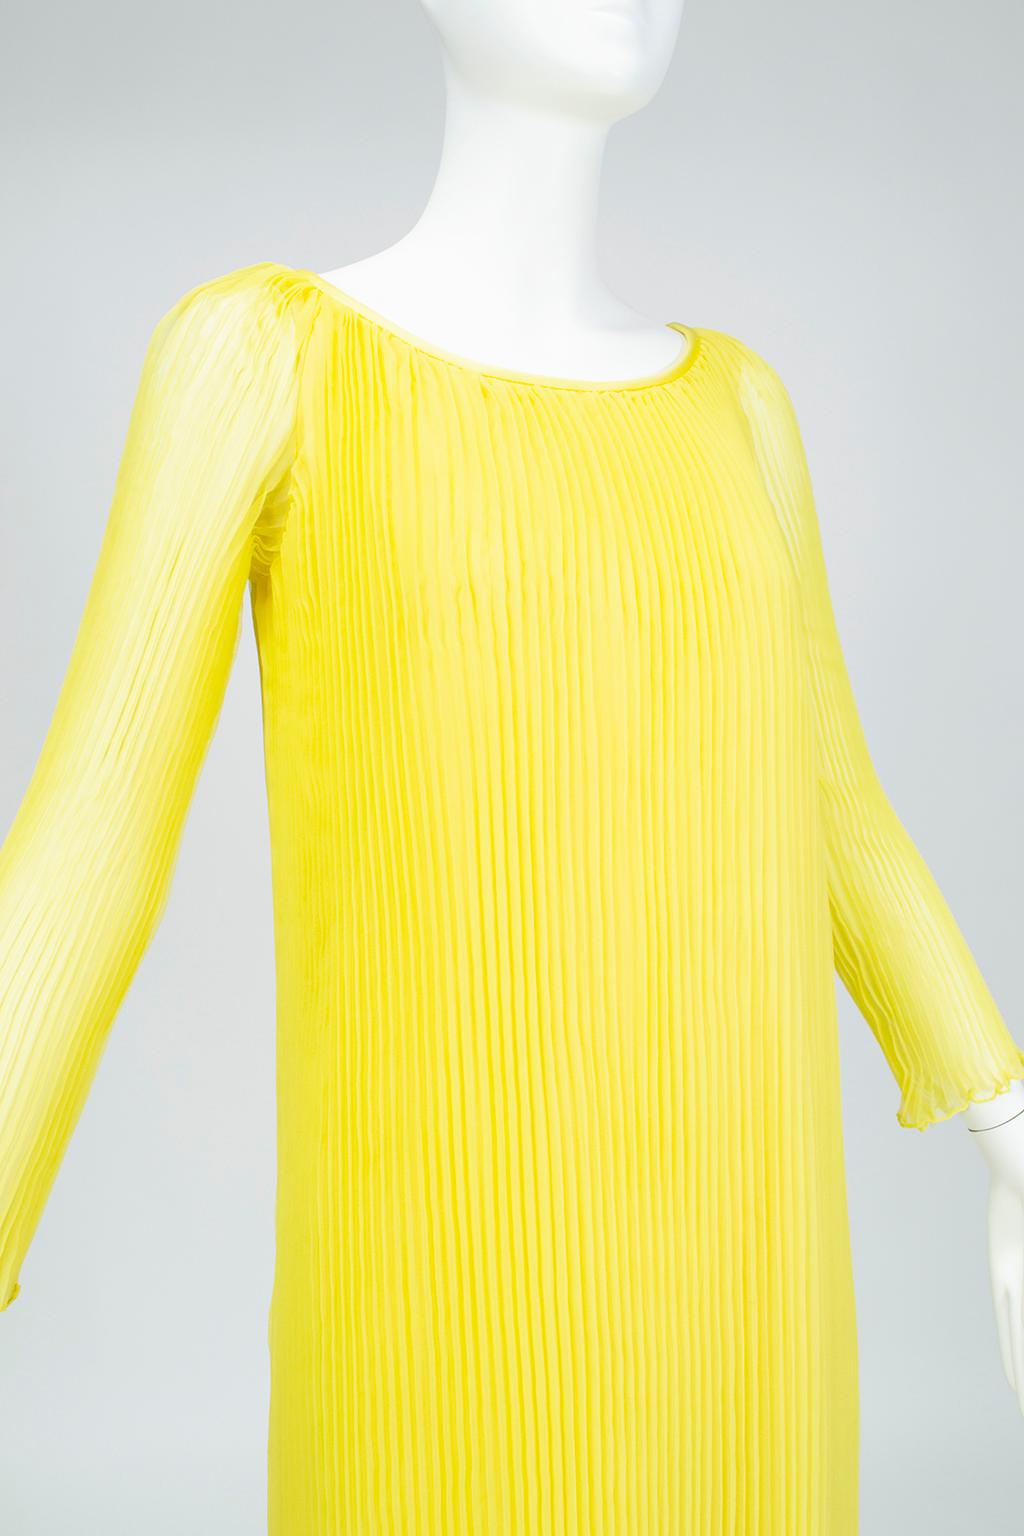 Women's Sheer Yellow Jeweled Plissé Tunic and Cigarette Pant Ensemble – XS, 1960s For Sale